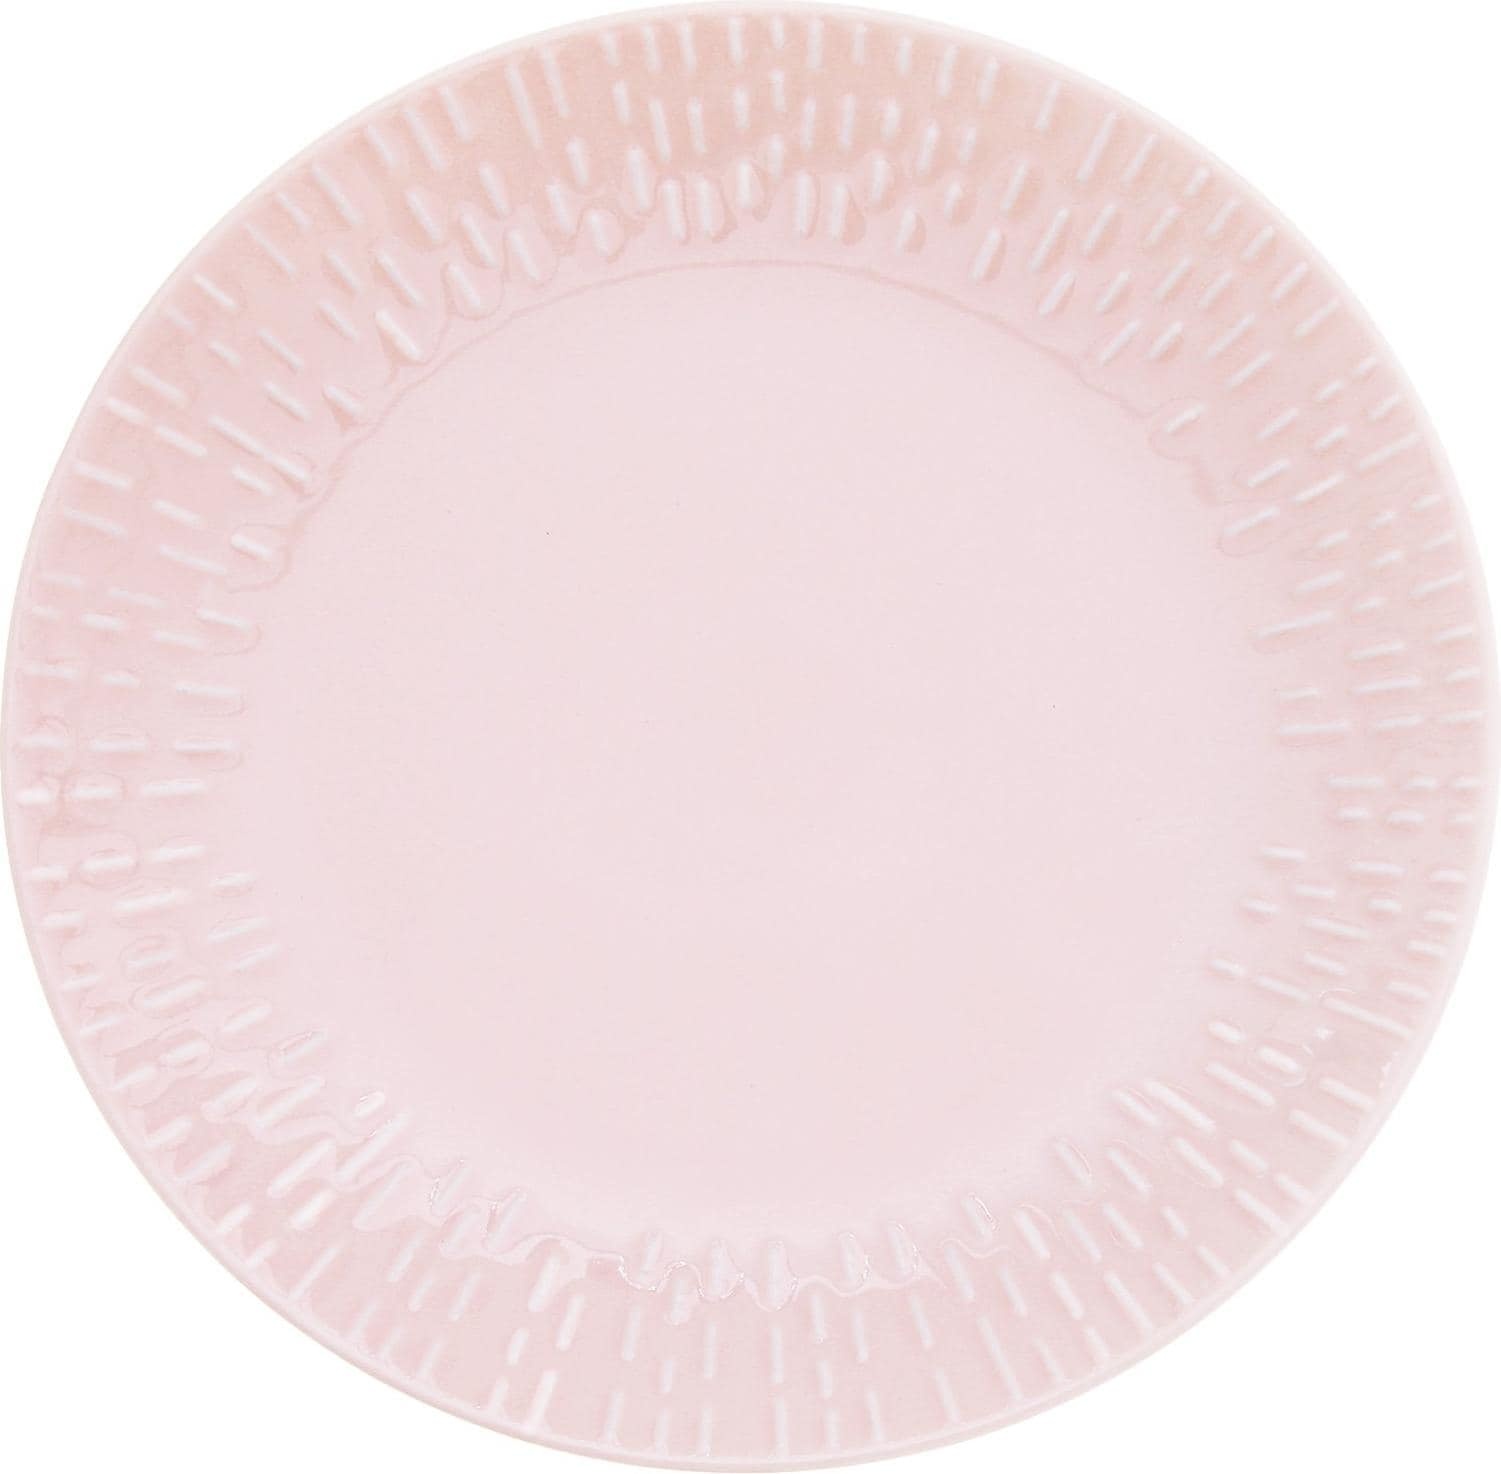 Aida Life in Colour - Confetti - Candy floss dessert plate w/relief porcelain (13342), Teller, Mehrfarbig